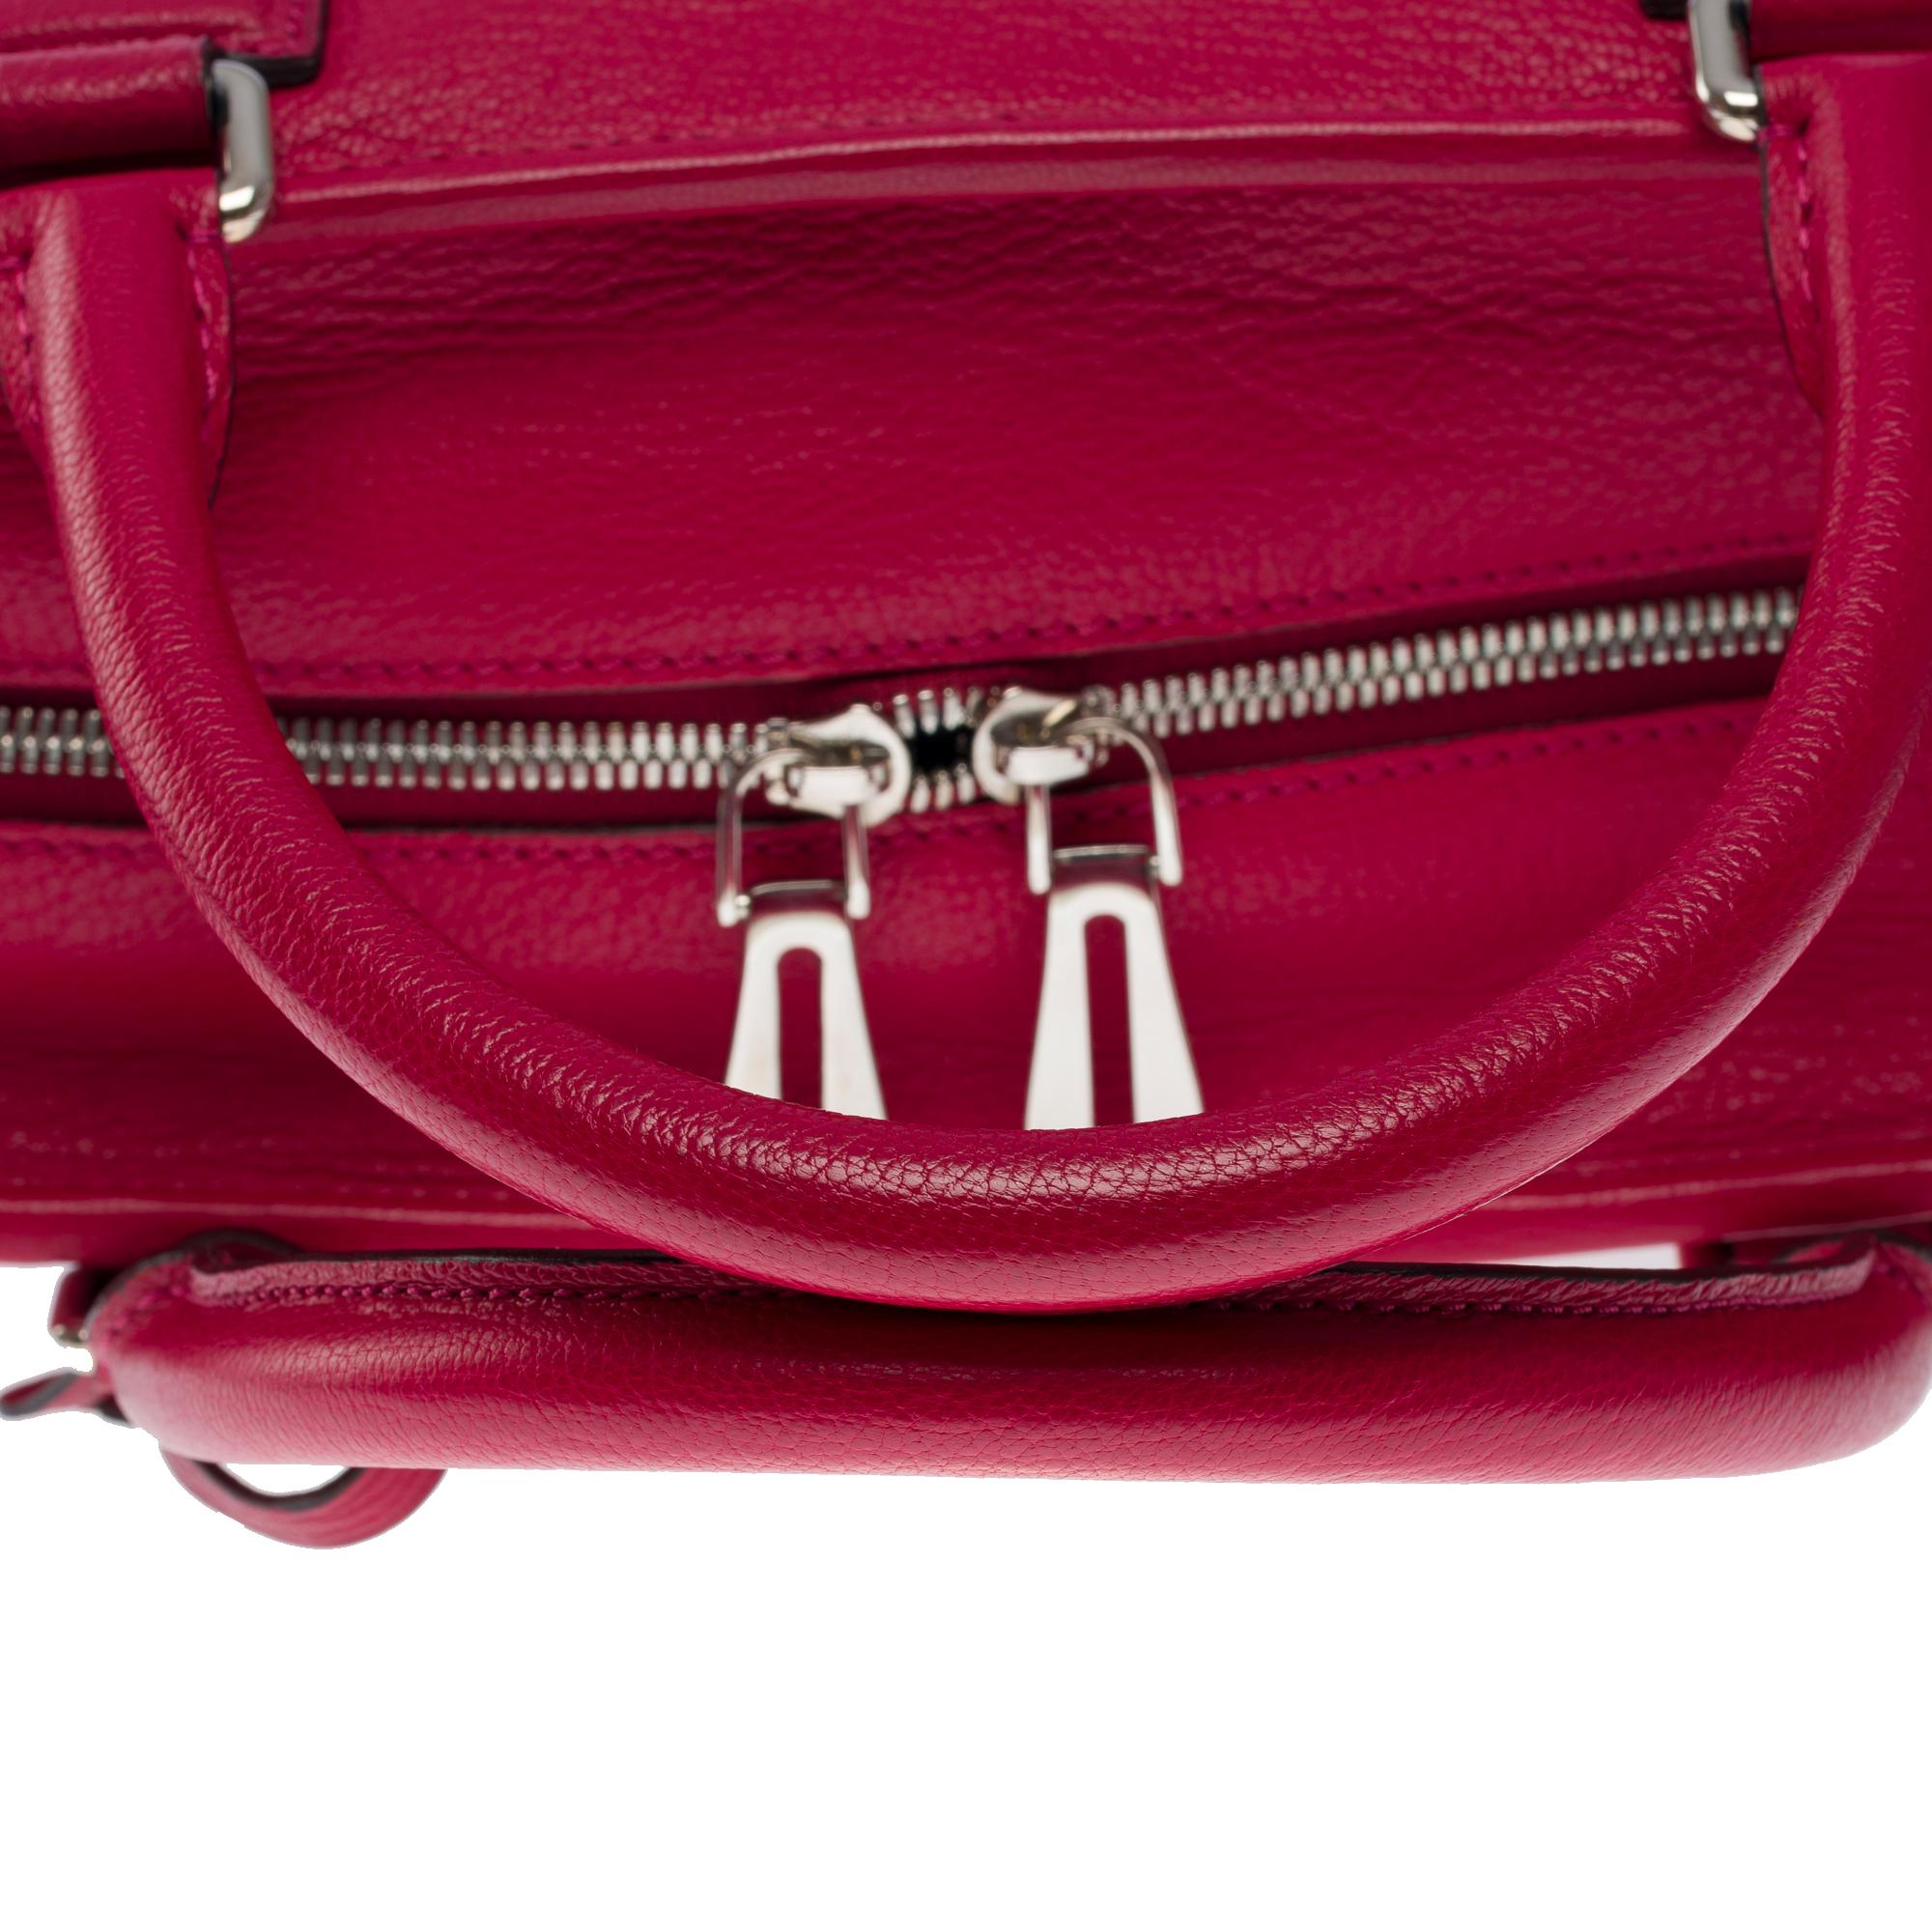 Delightful Loewe Amazona 36 (GM) handbag in red leather, SHW For Sale 5